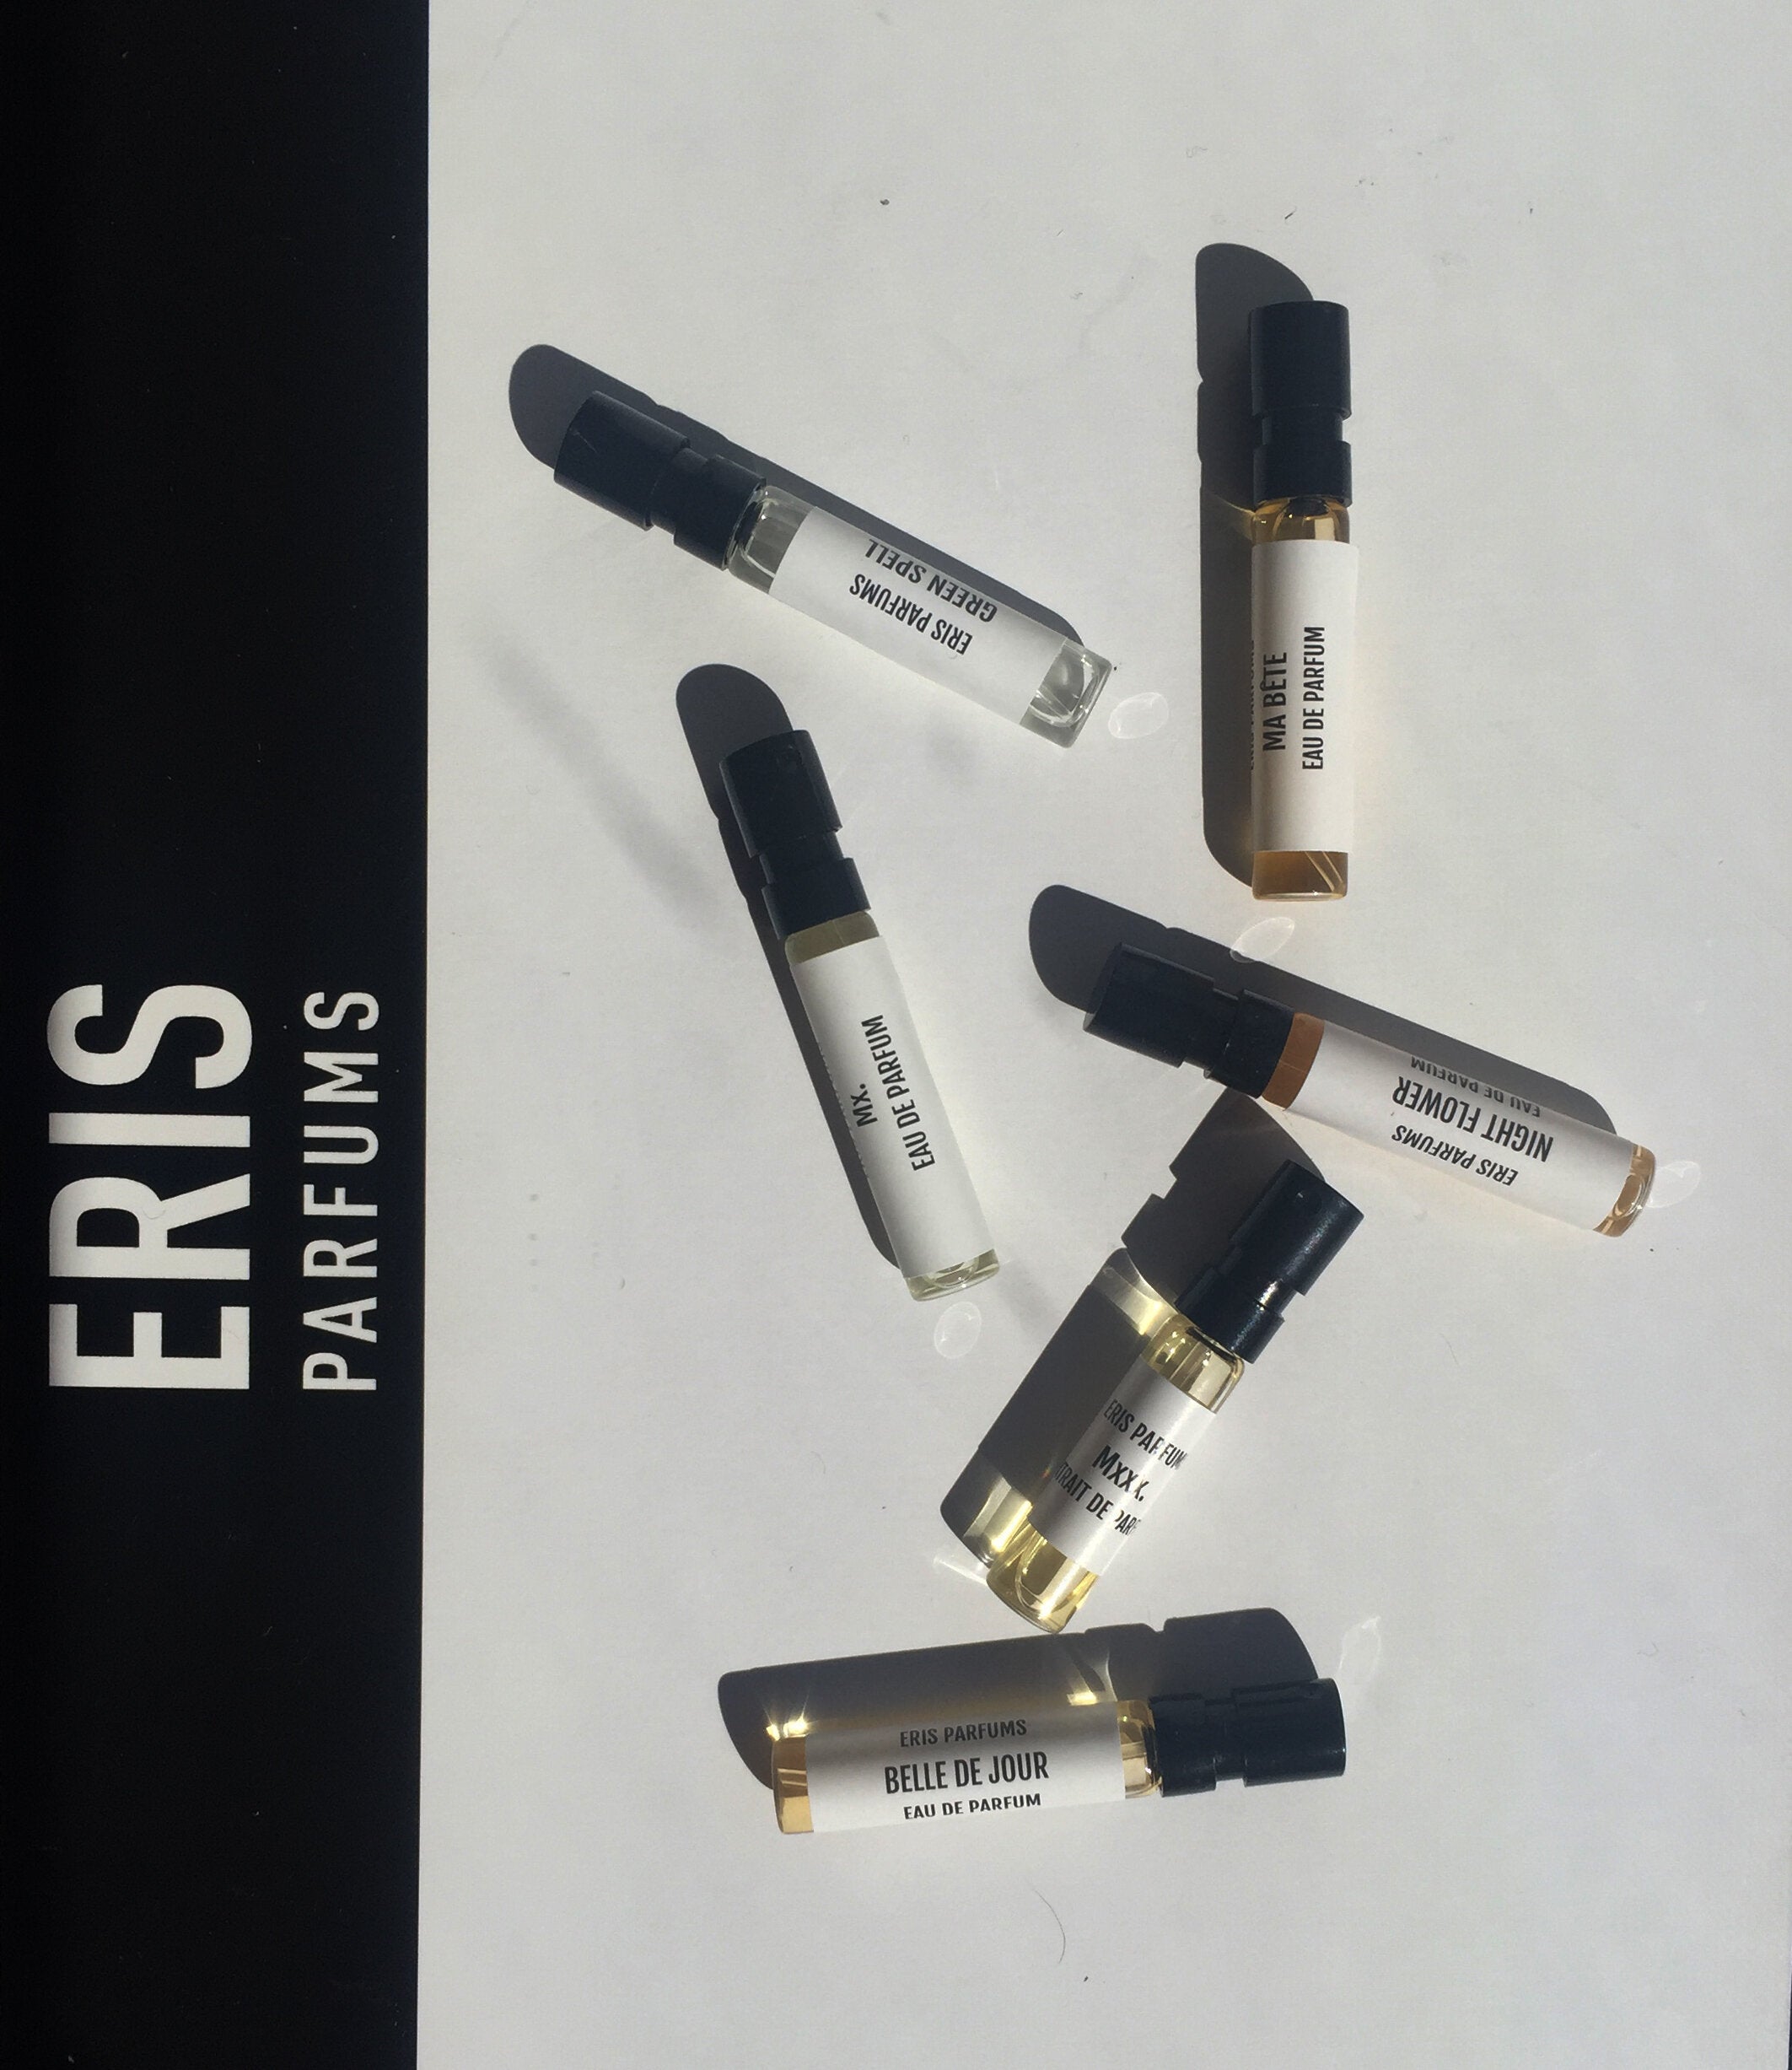 Explore GREEN SPELL Eau de Parfum – Eris Parfums